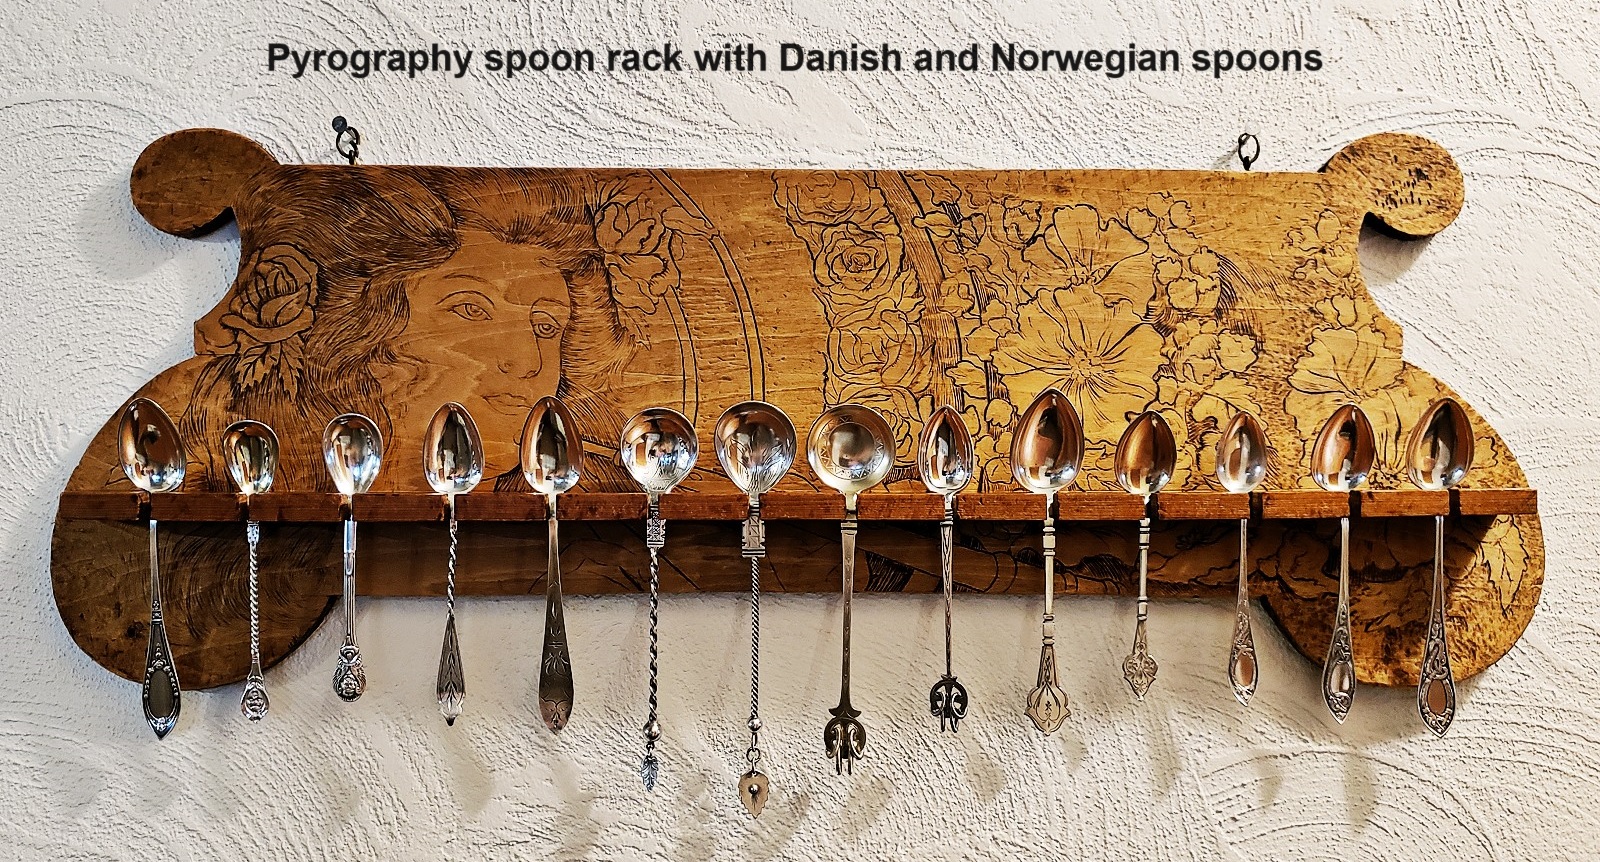 pyrography-spoon-rack-danish-and-norwegian-spoons-description.jpg